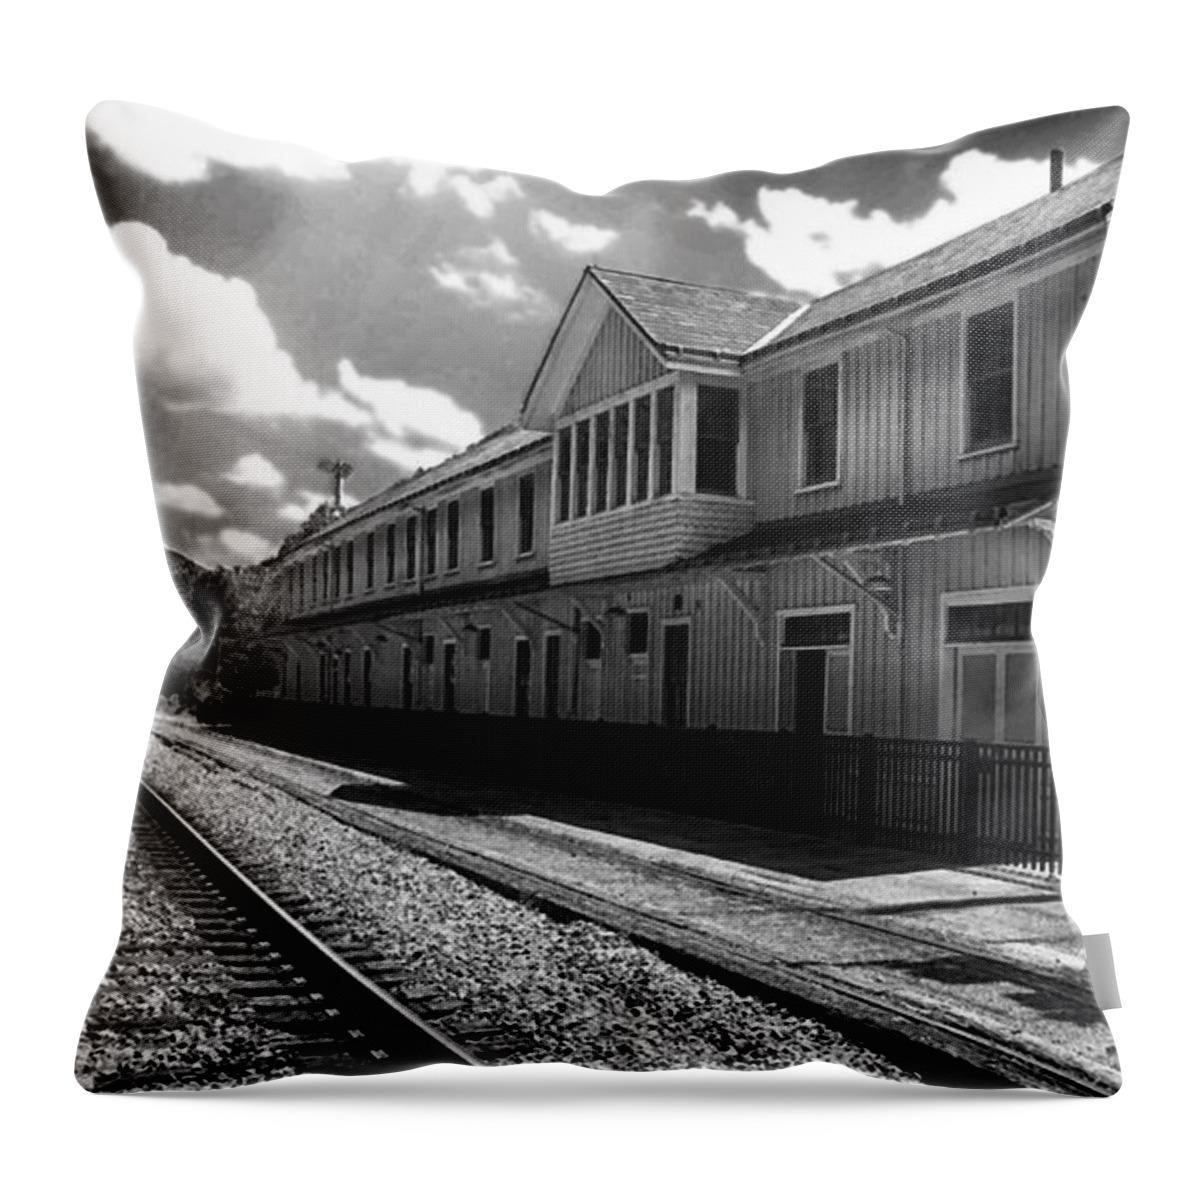 Train Depot Throw Pillow featuring the photograph Historic Thurmond Depot by Thomas R Fletcher